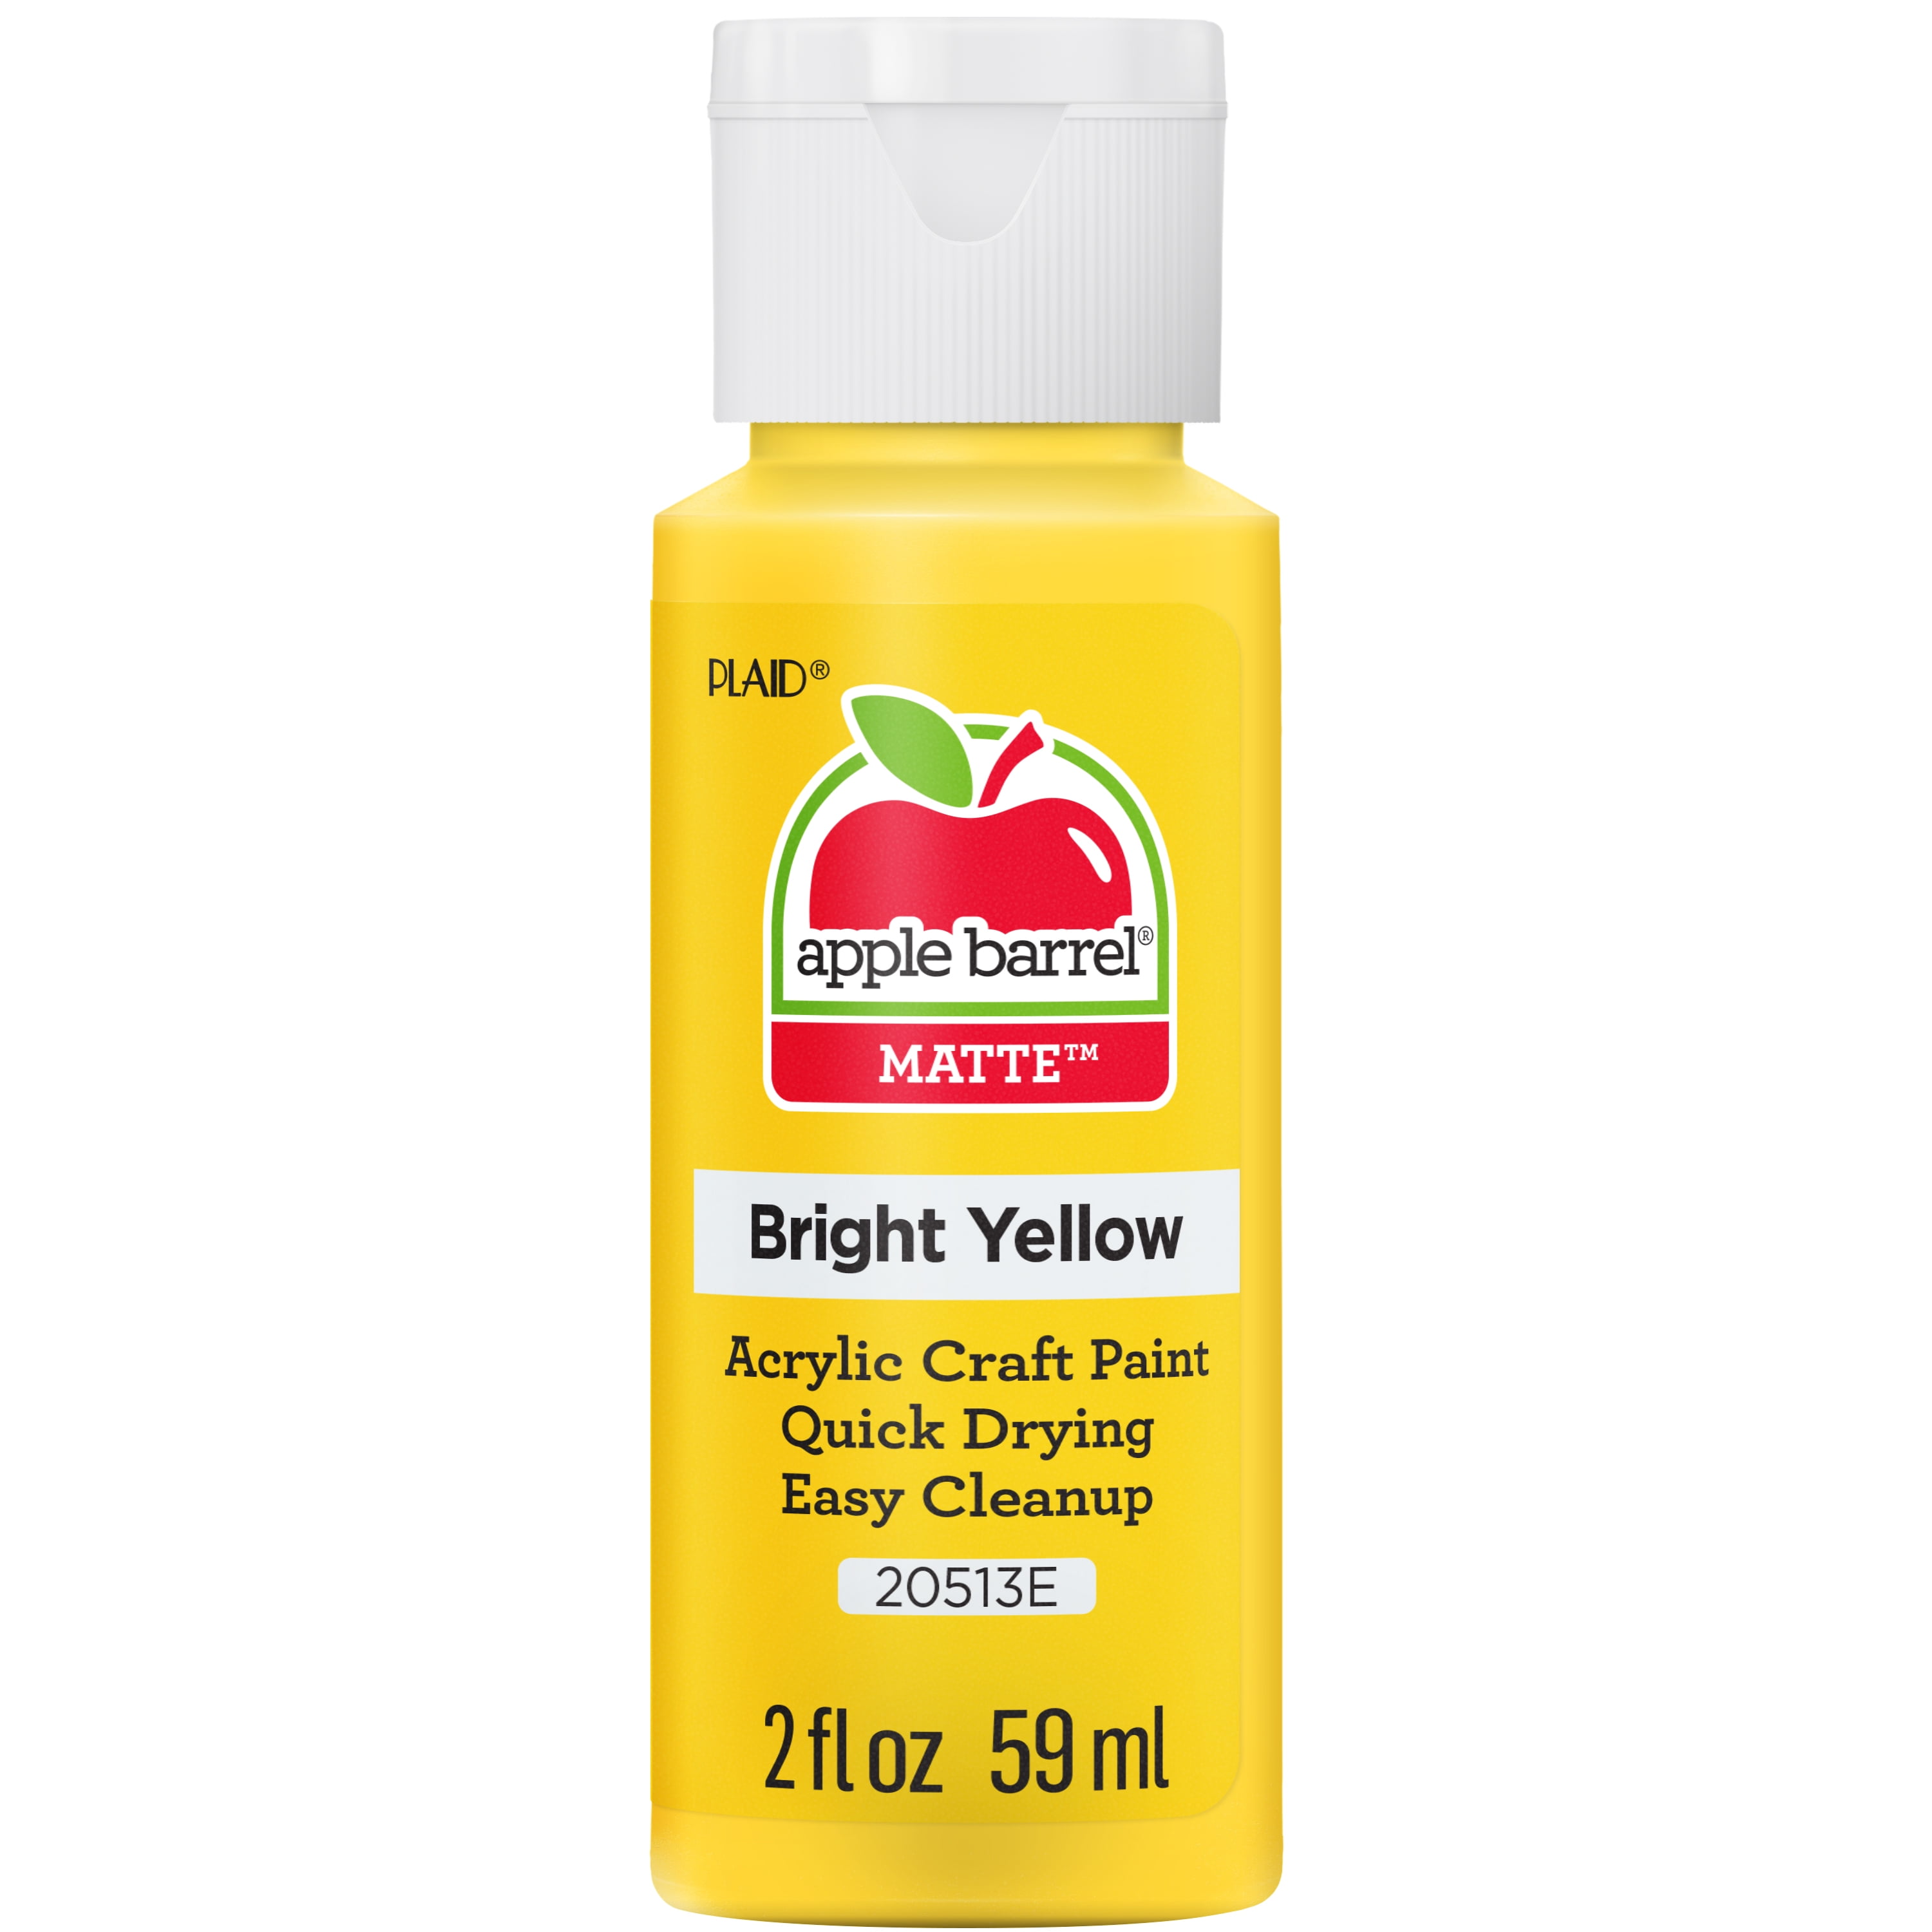 Plaid Apple Barrel Acrylic Craft Paint, Bright Yellow - 2 fl oz bottle